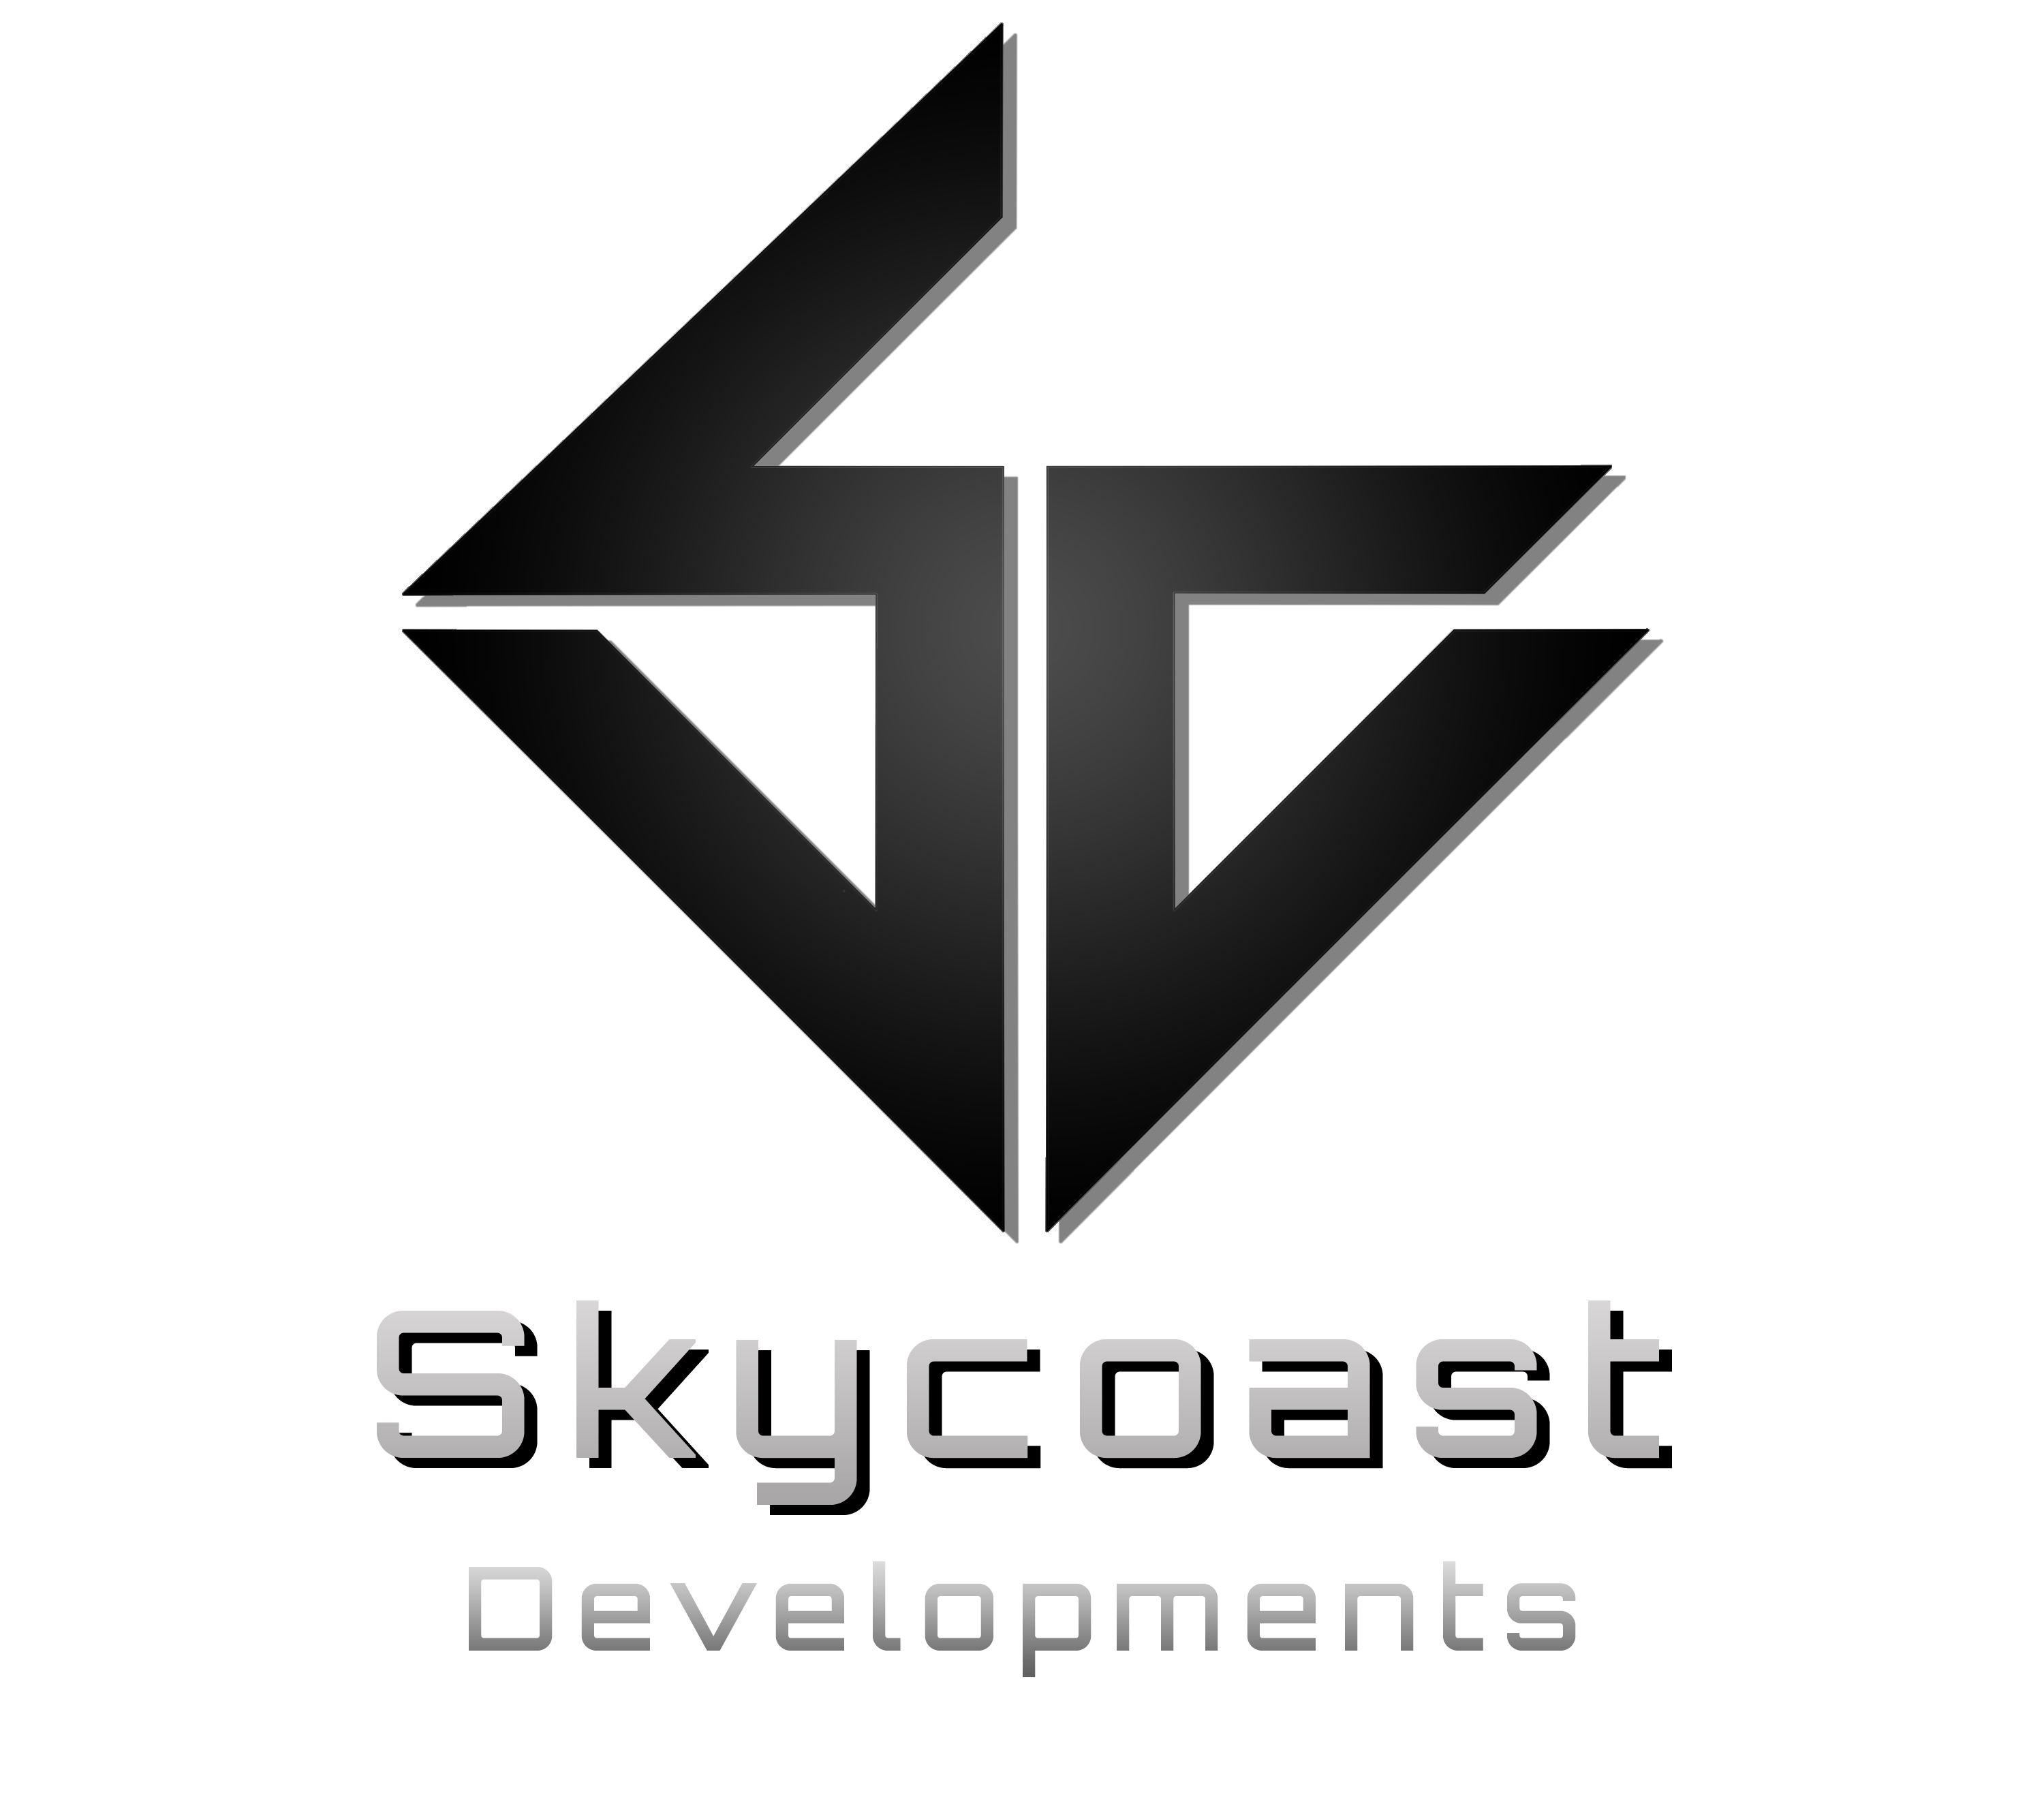 Skycoast Developments